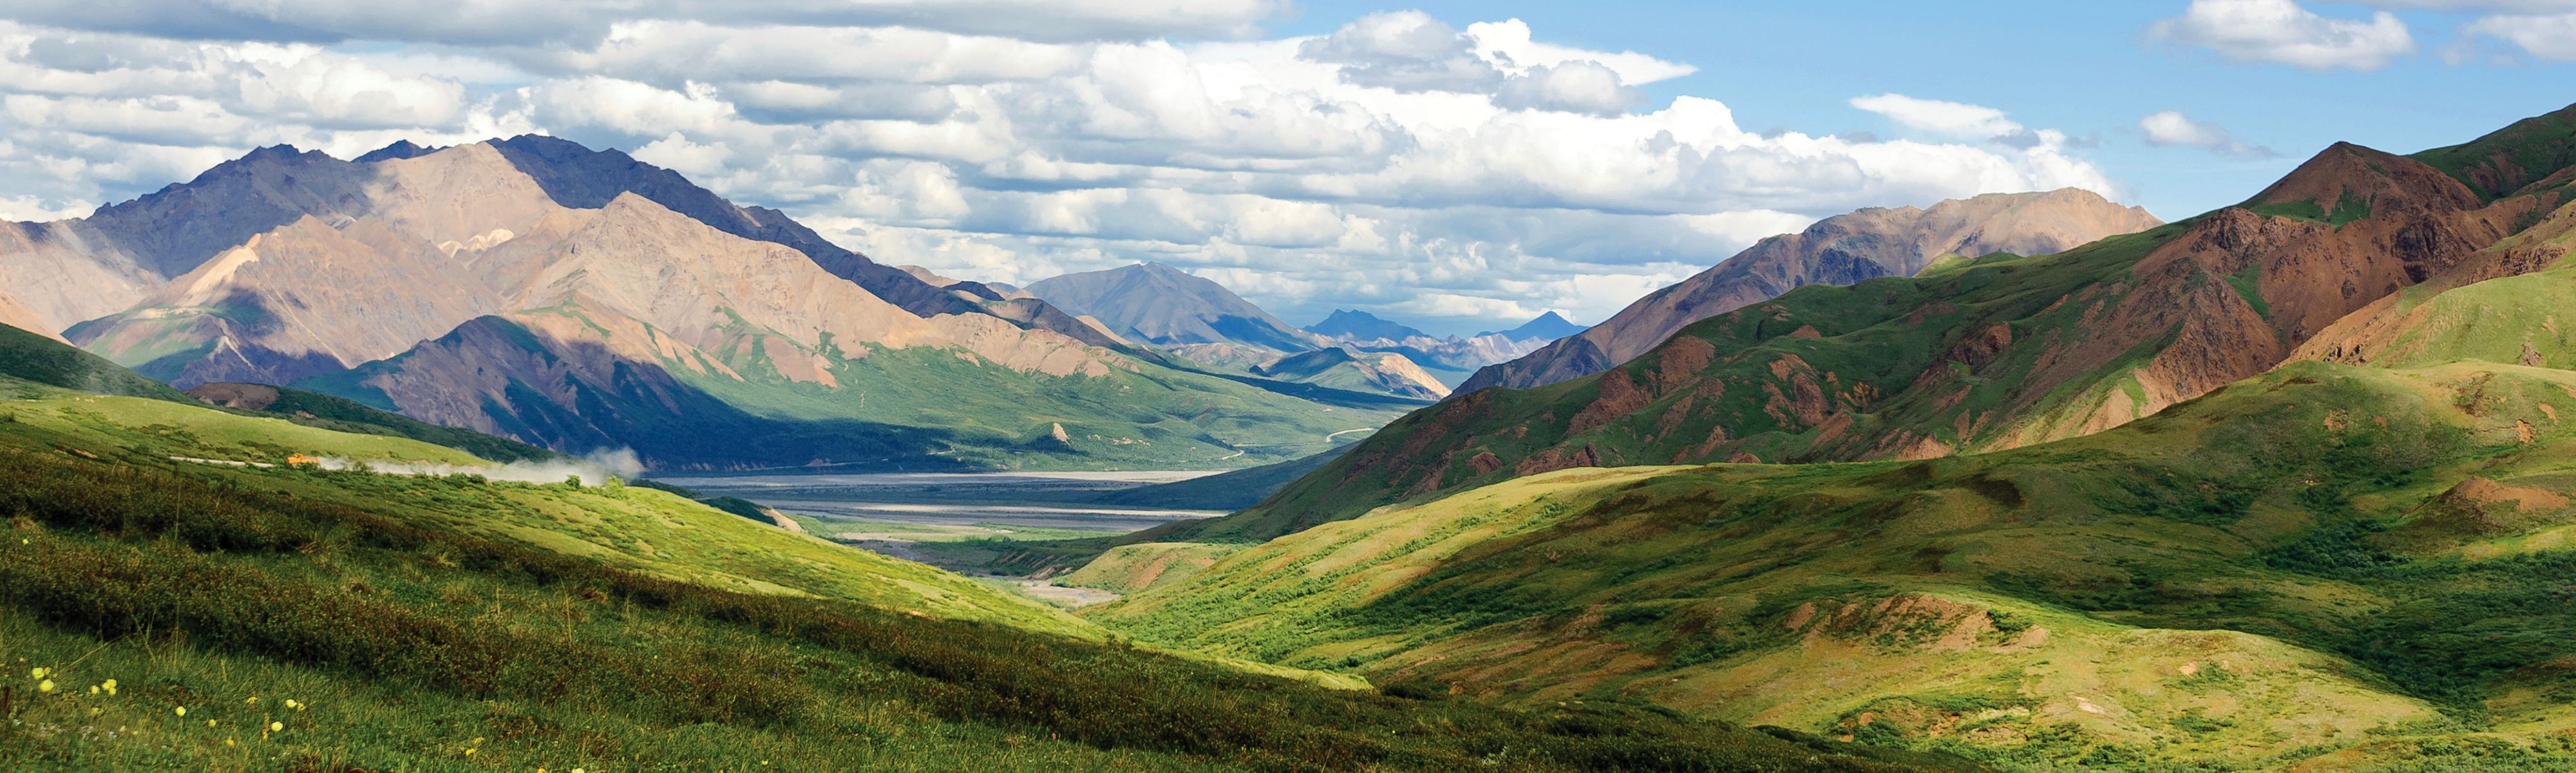 Denali National Park Tour & Wild Alaska Cruise EF Go Ahead Tours